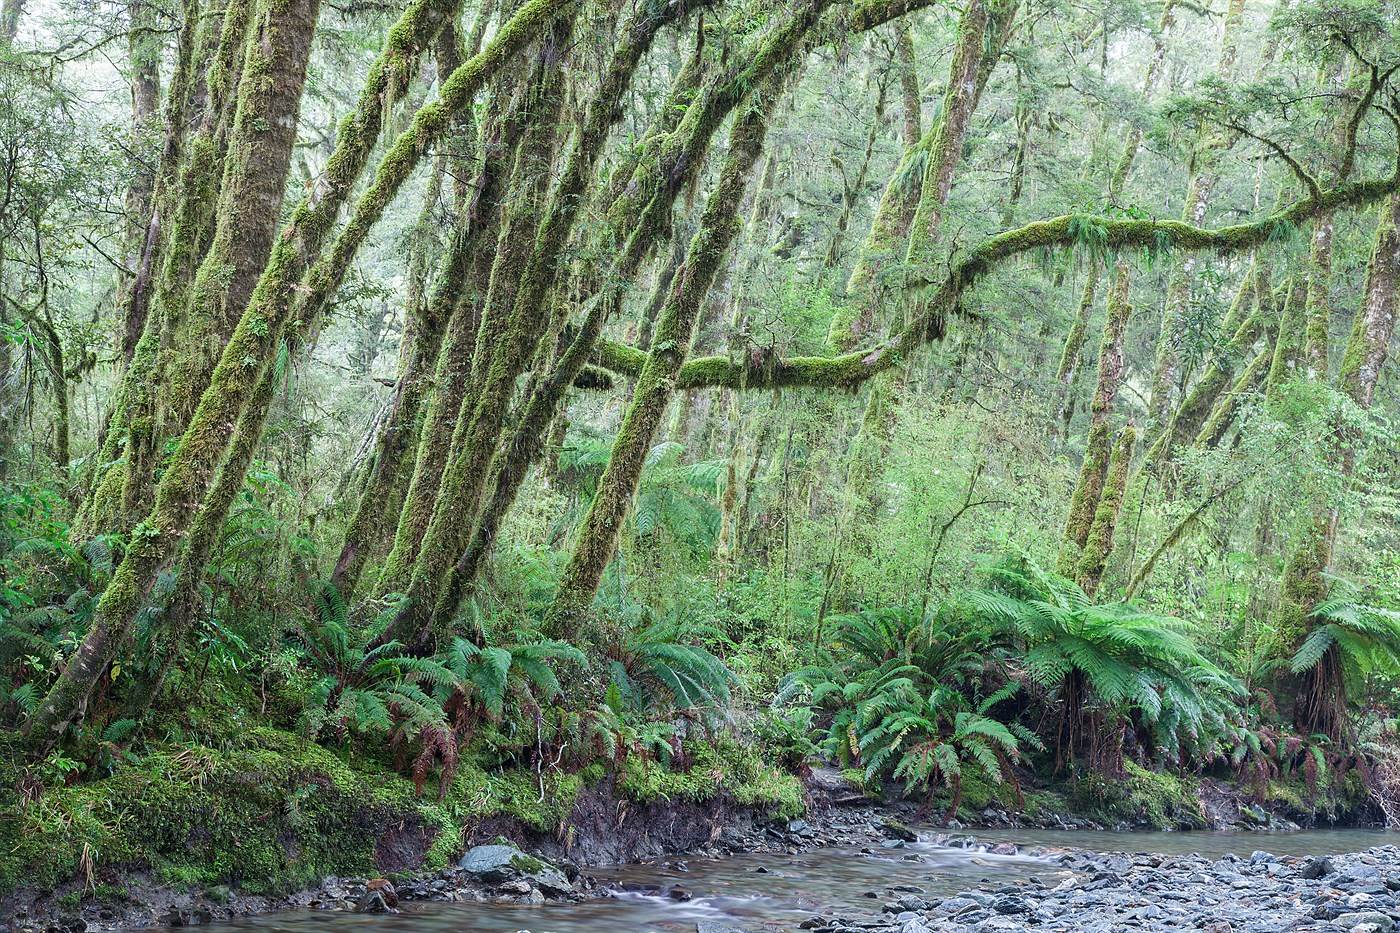 West Coast forest, photo